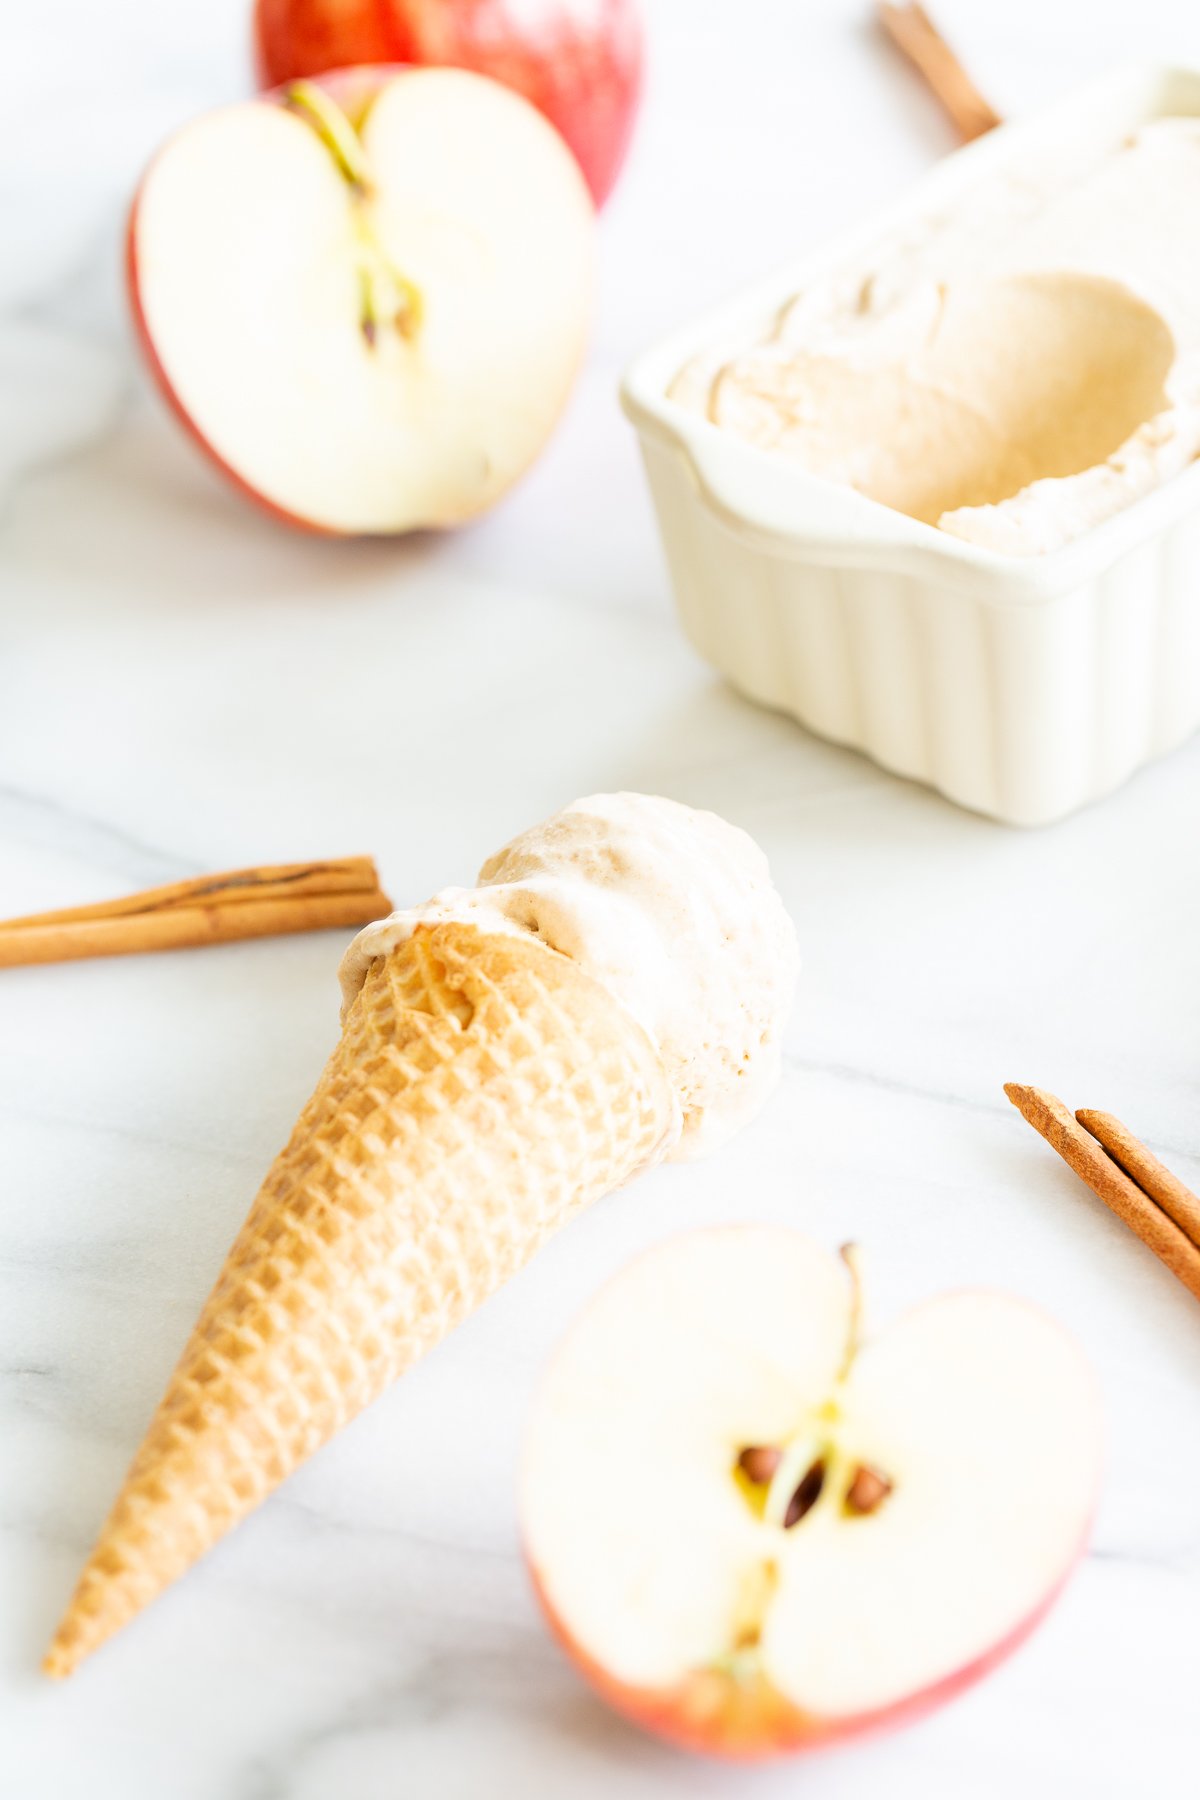 An apple ice cream cone with cinnamon sticks.